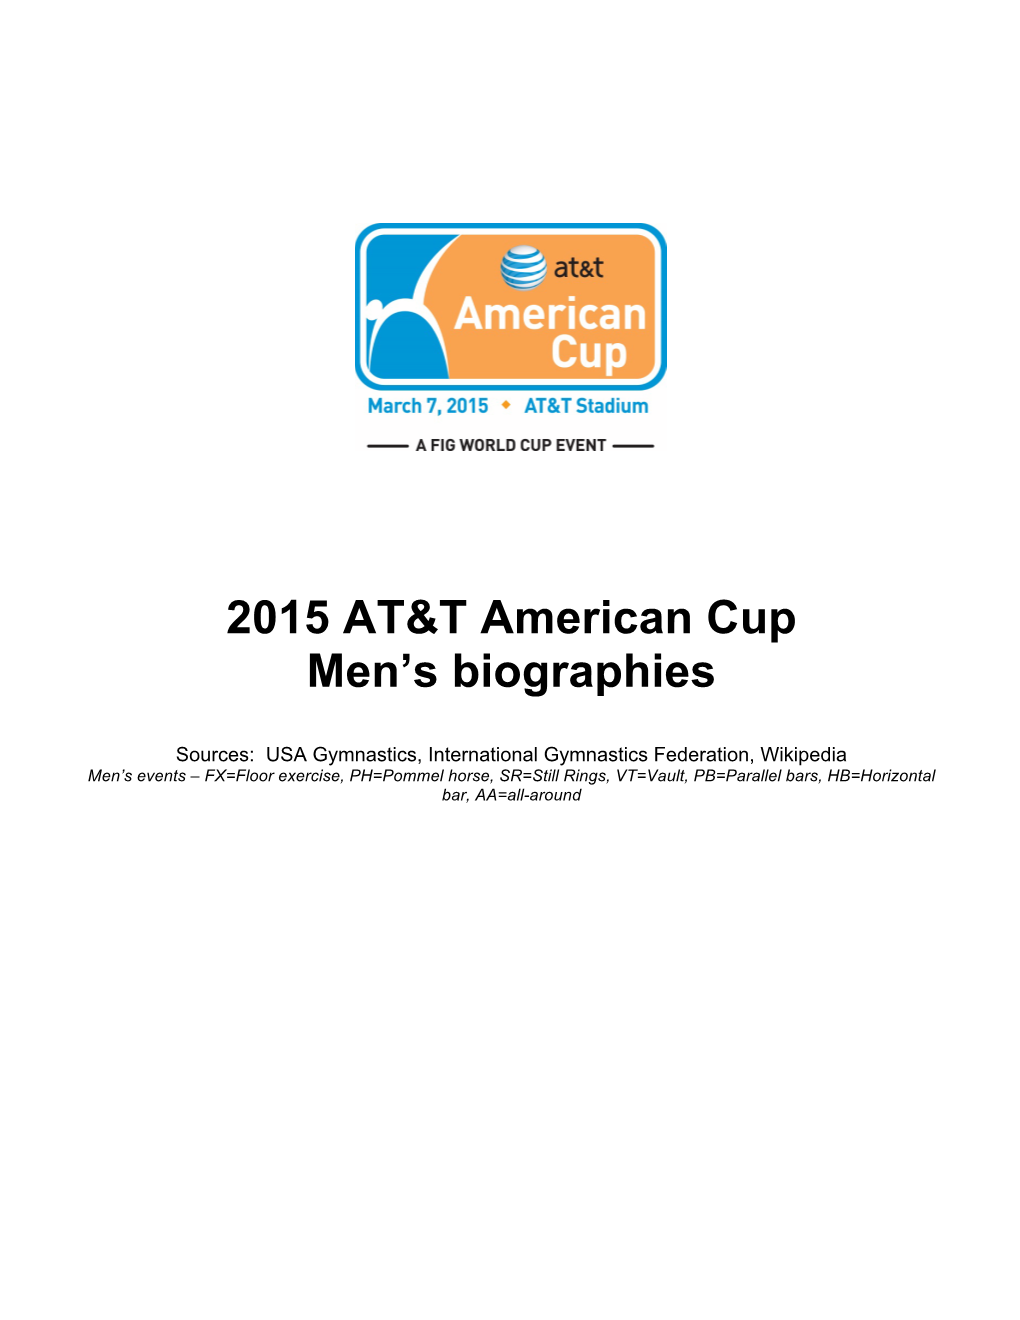 2015 AT&T American Cup Men's Biographies